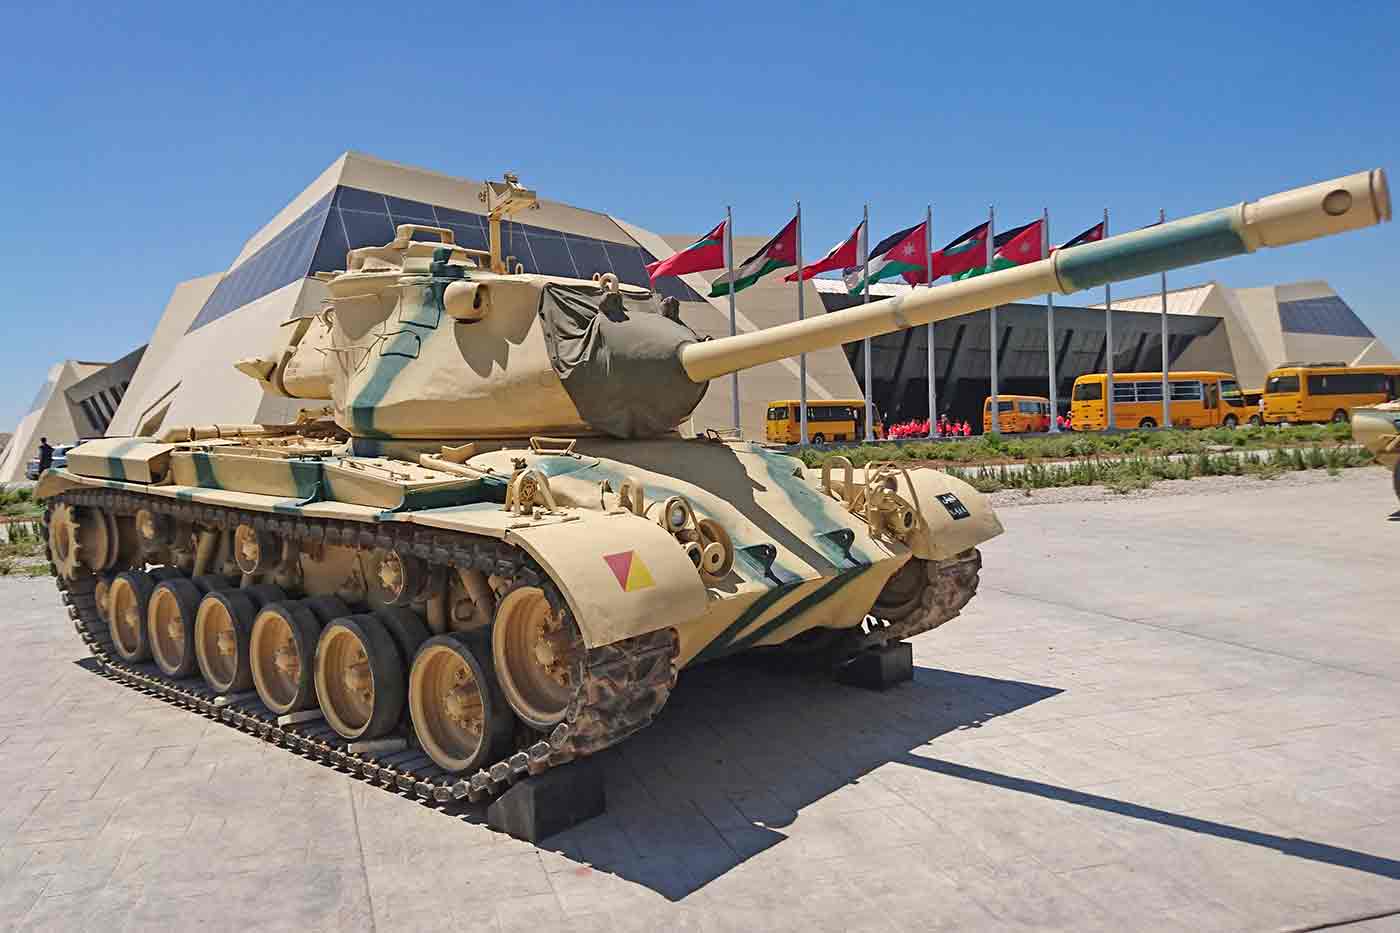 The Royal Tank Museum